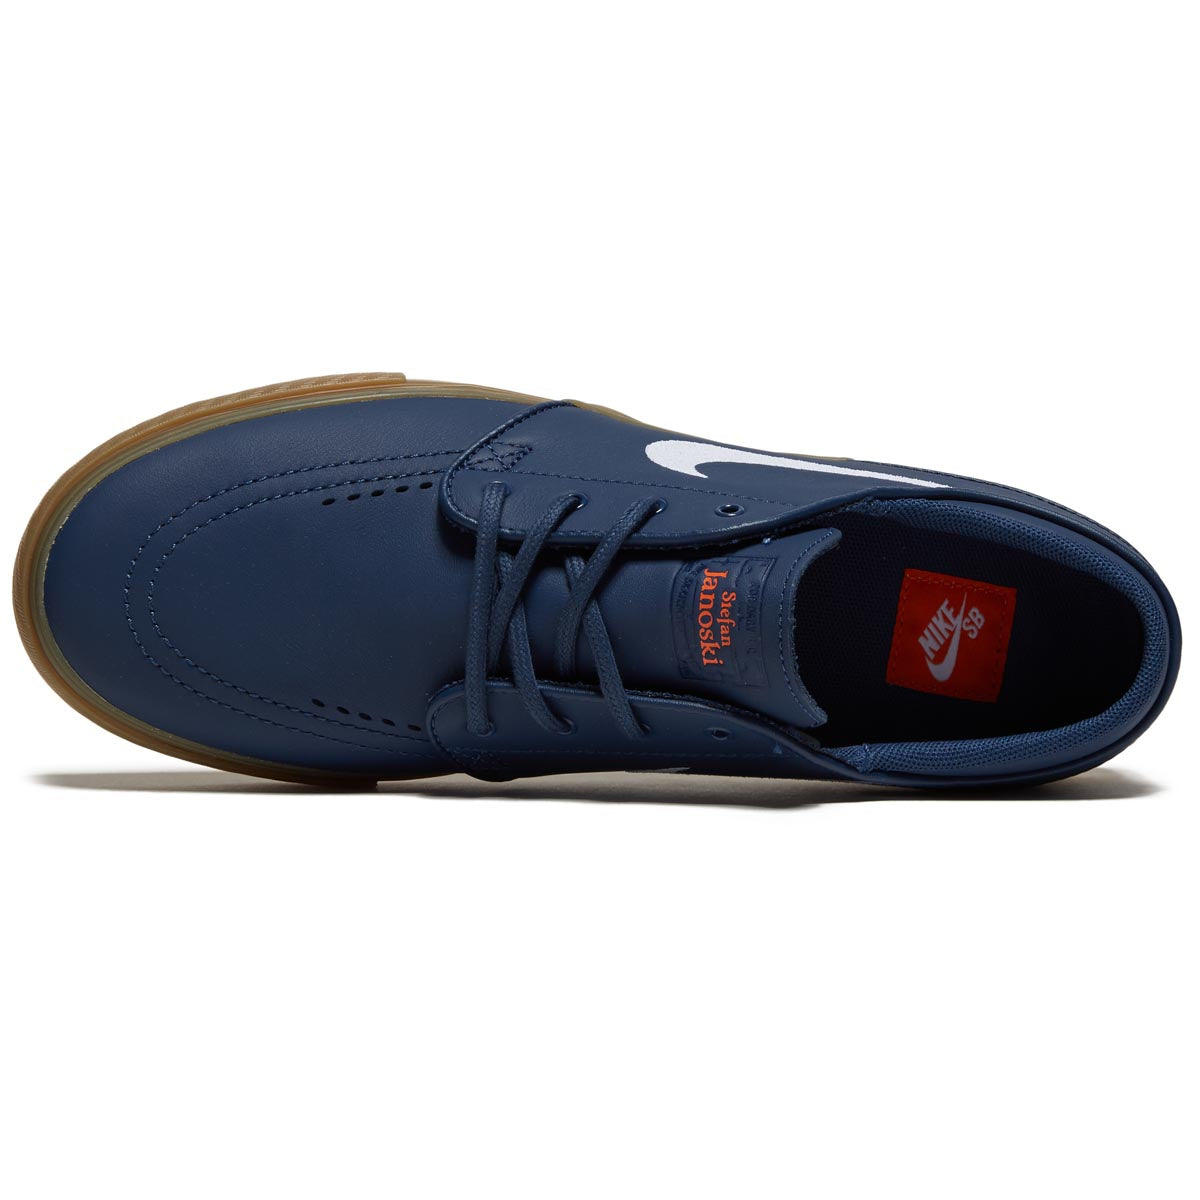 Nike SB Zoom Janoski OG Plus Shoes - Navy/White/Navy/Gum Light Brown image 3